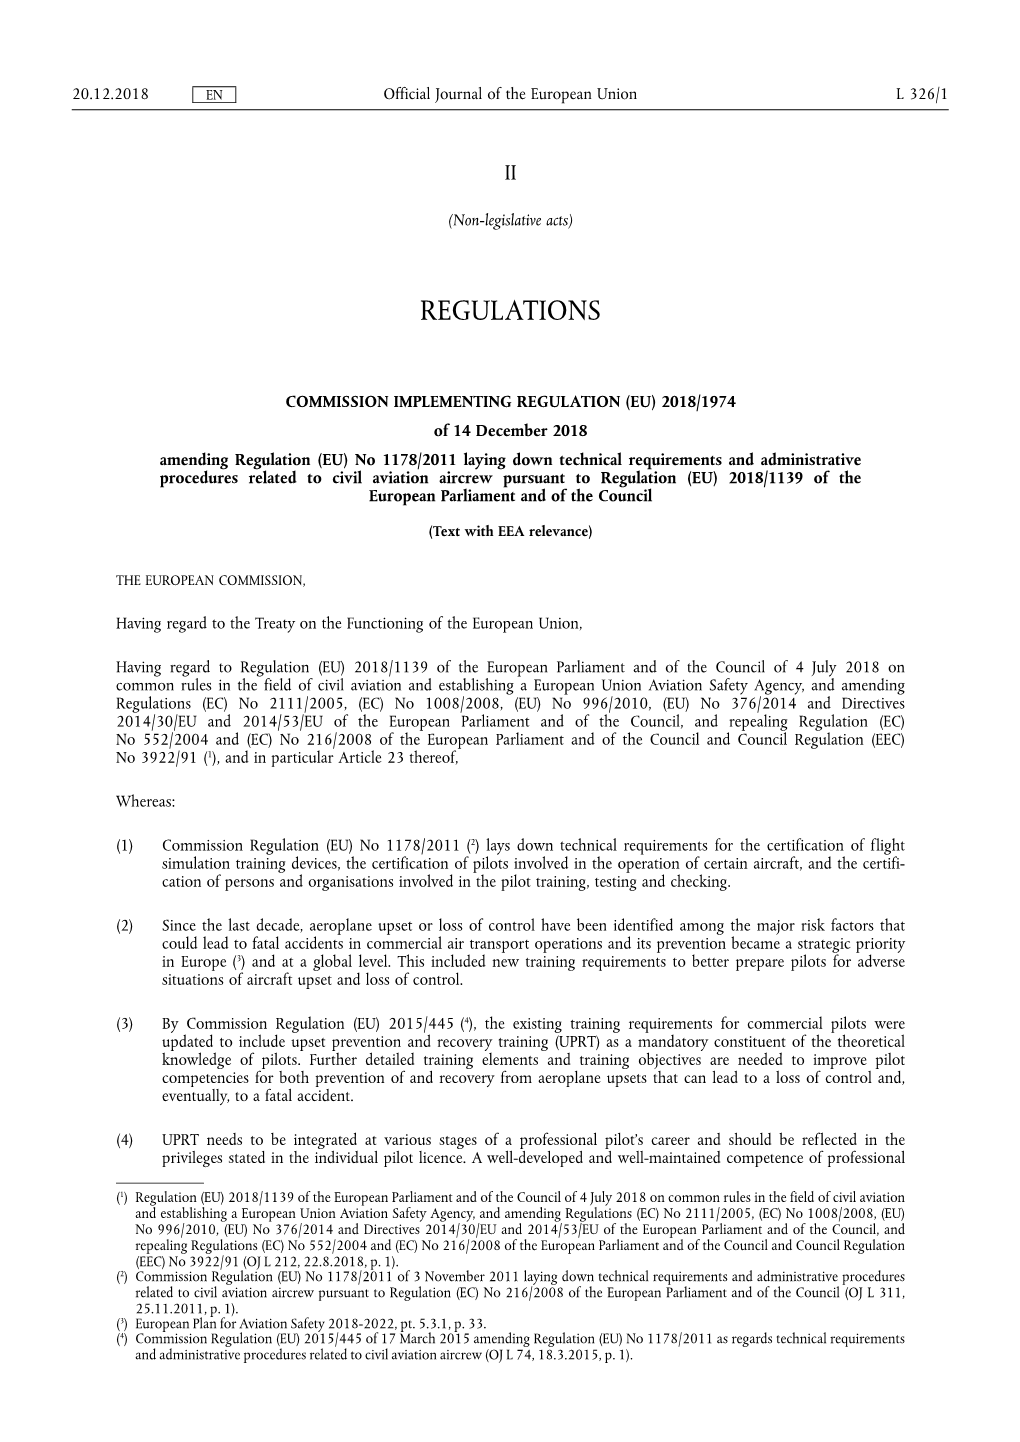 Commission Implementing Regulation (Eu